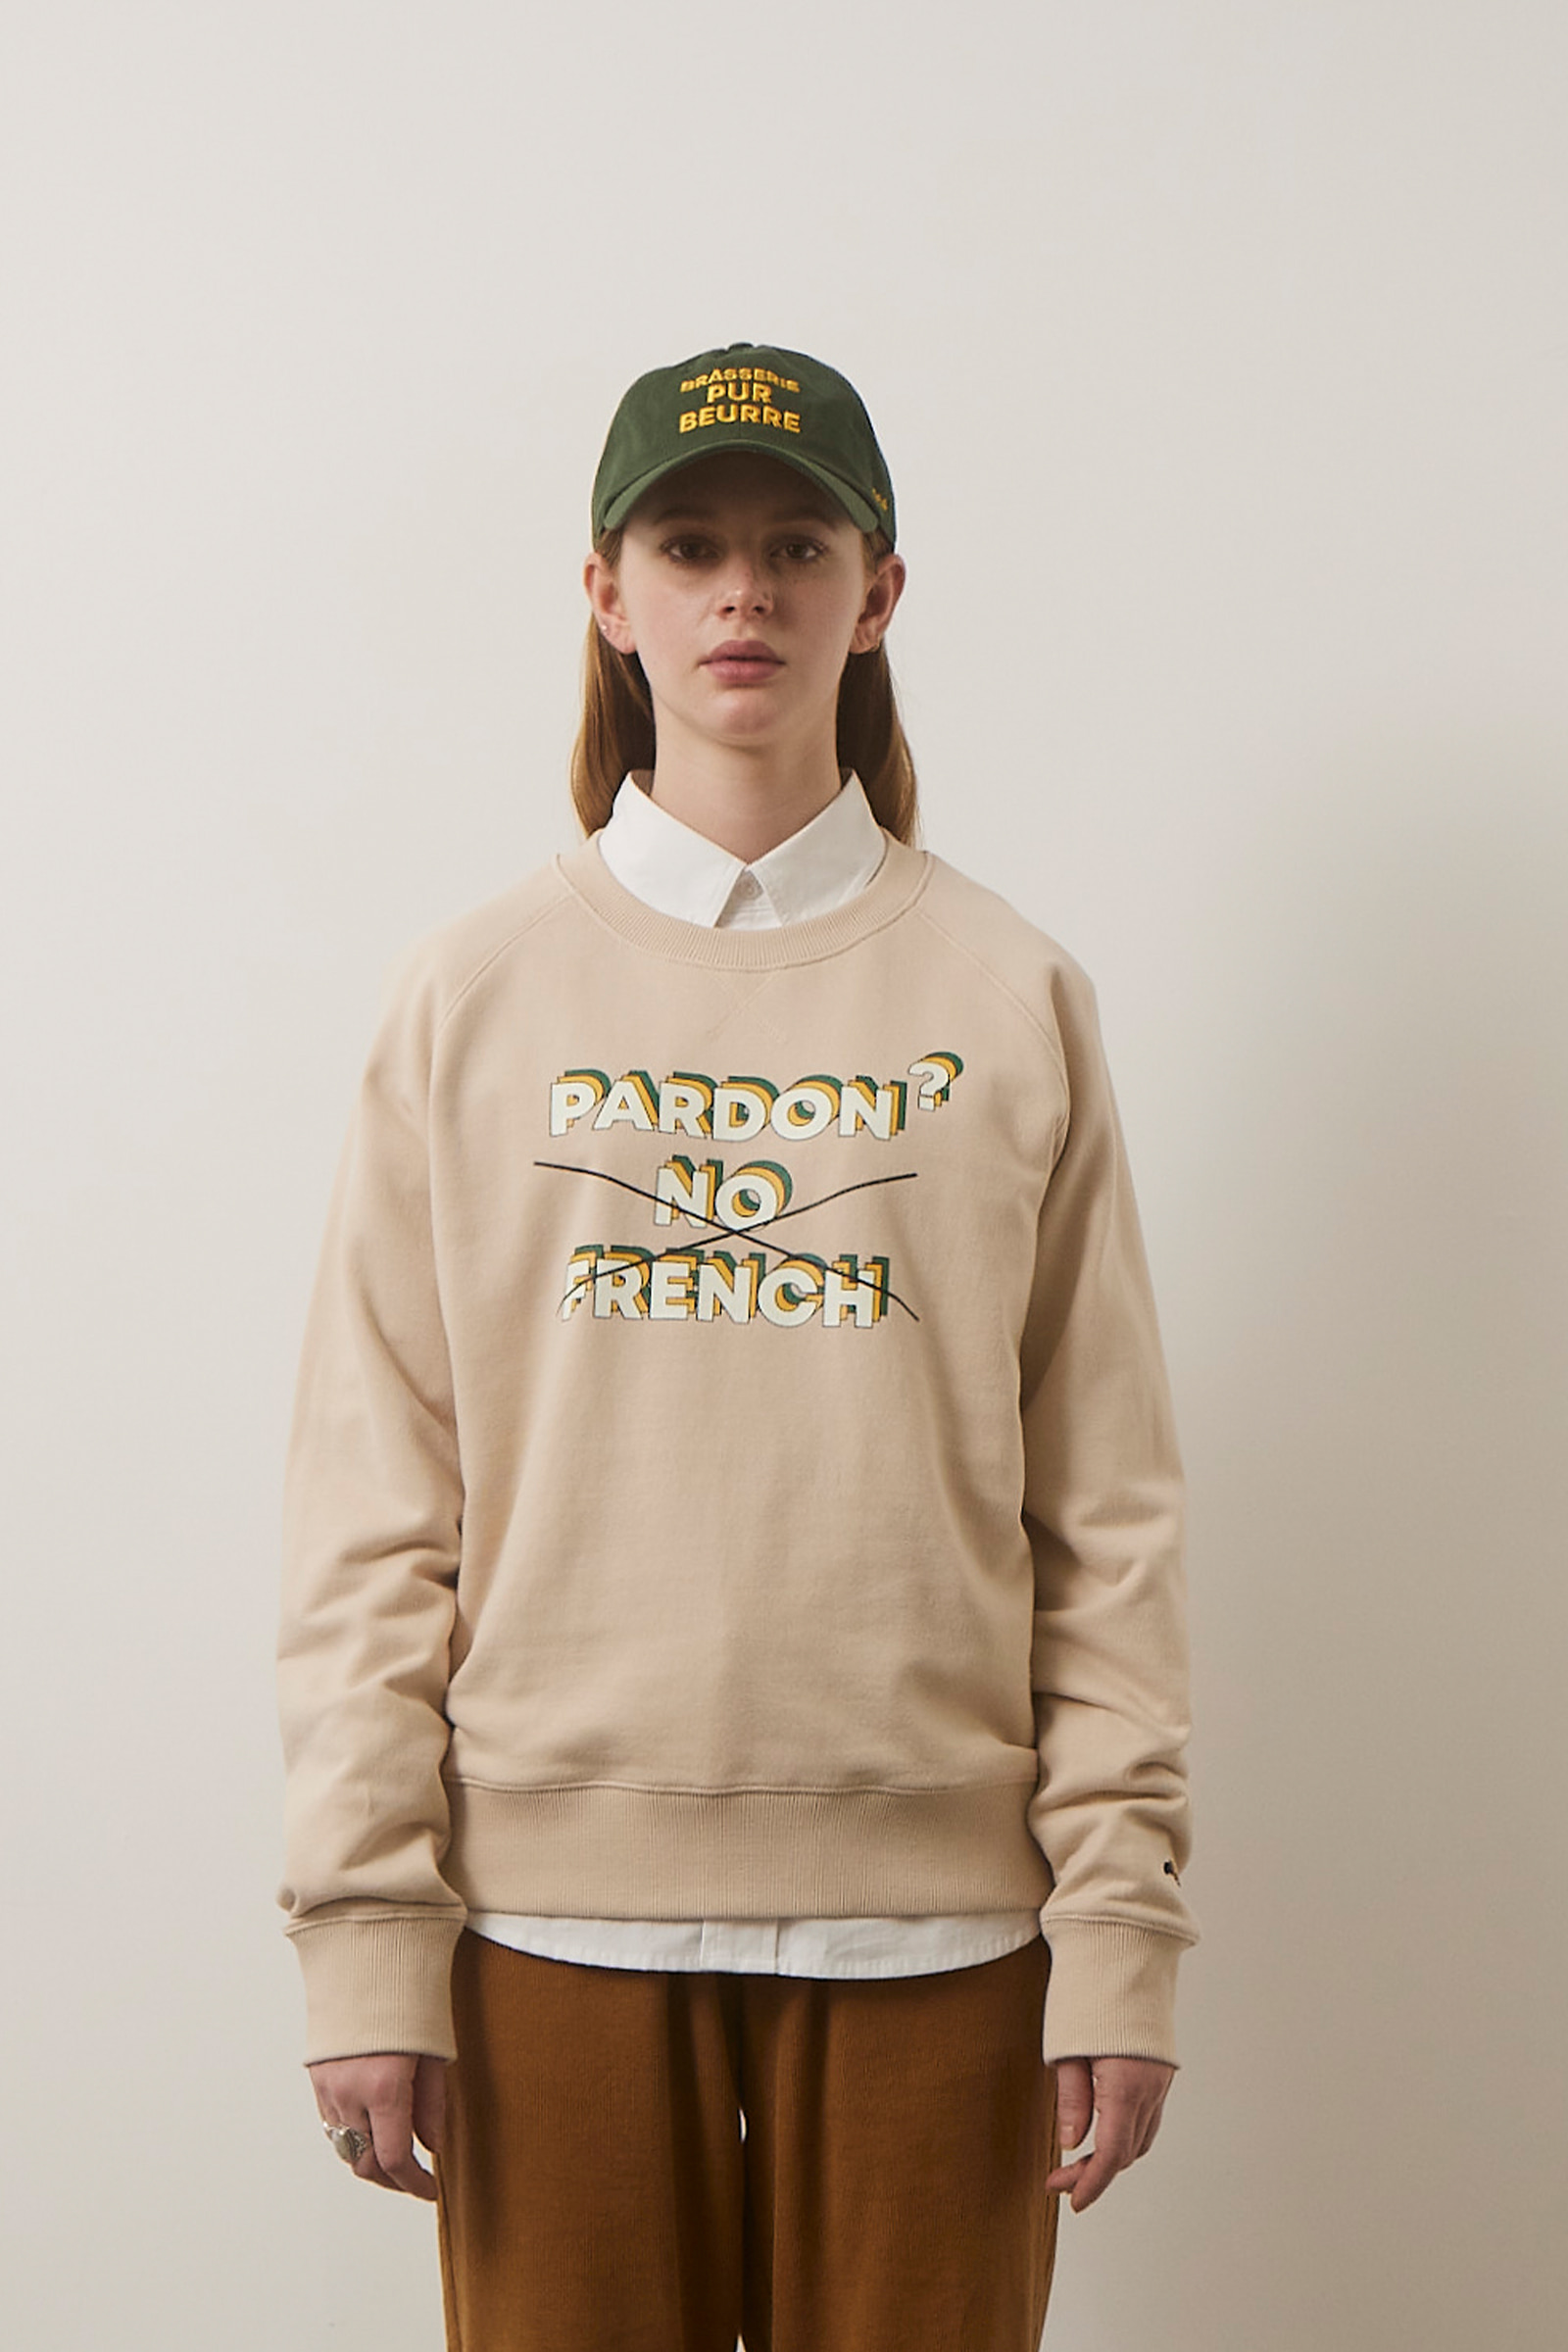 ep.5 Pardon? Sweatshirts (White/Yellow/Green)